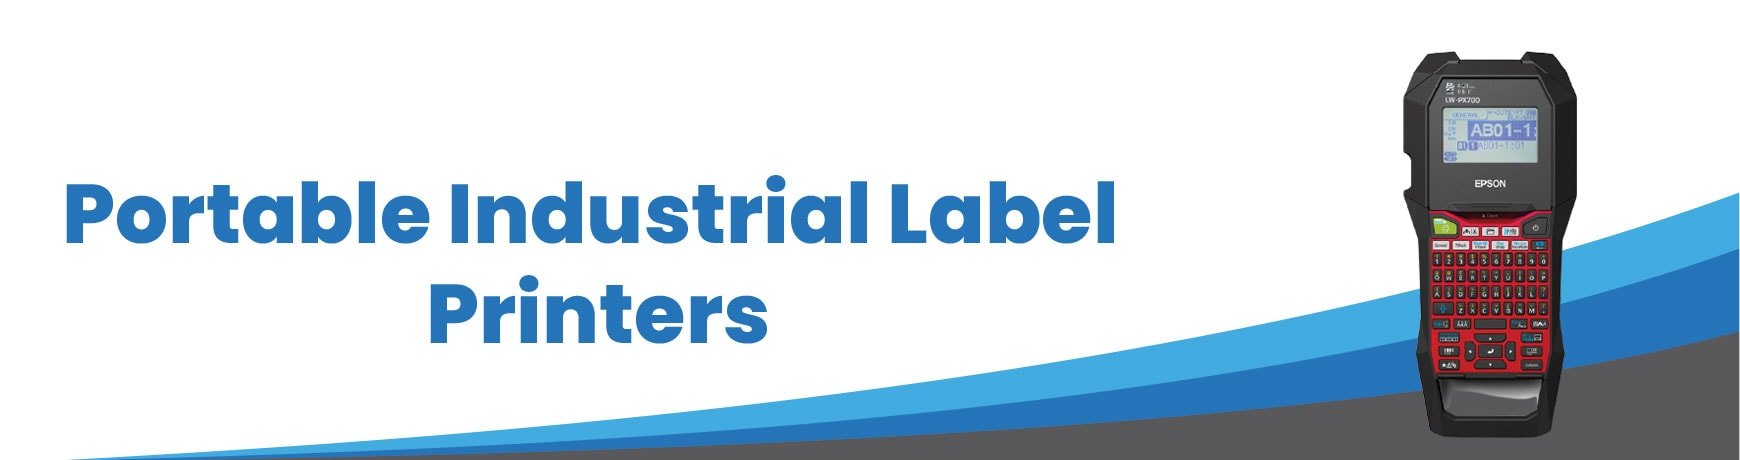 Portable Industrial Label Printers